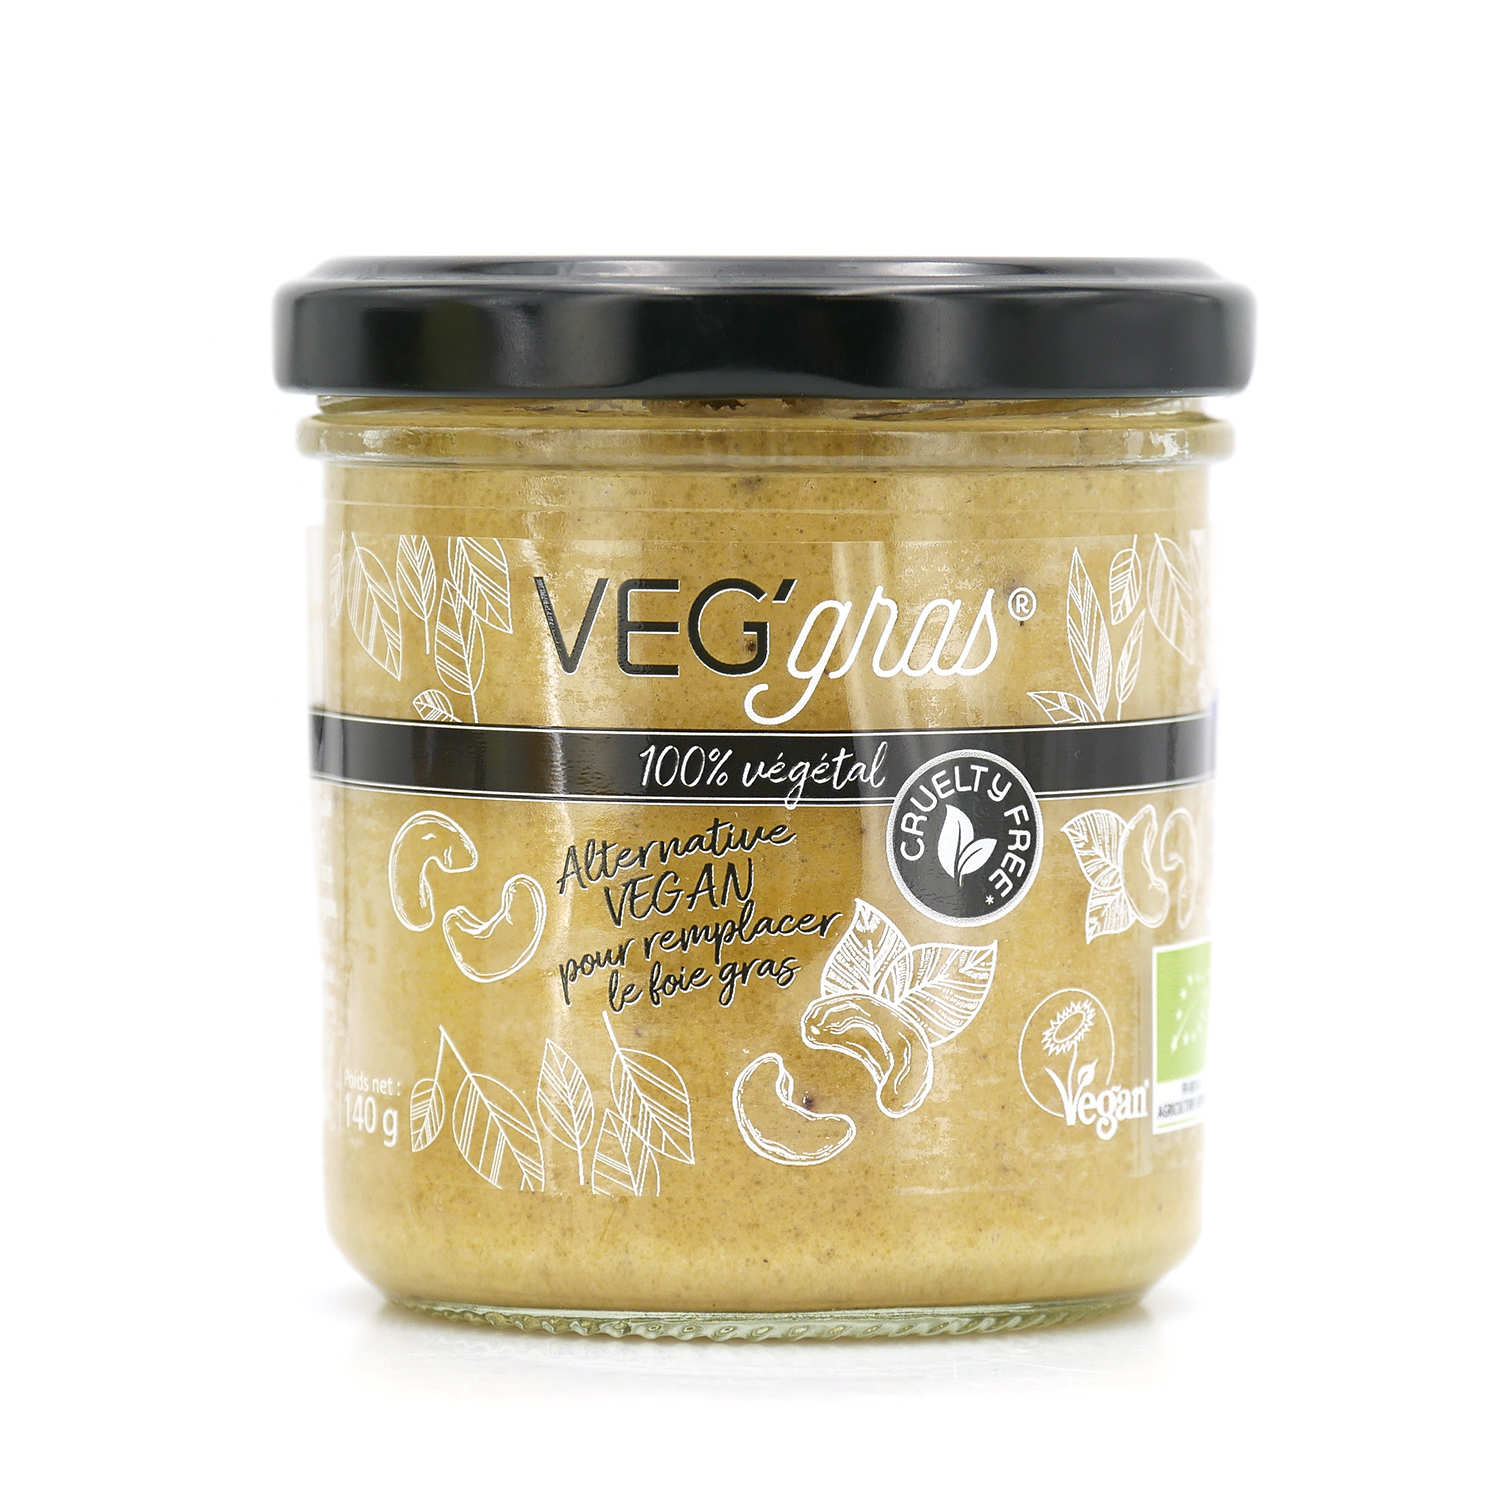 Organic VEG'Gras® - Vegan speciality substitute for foie gras